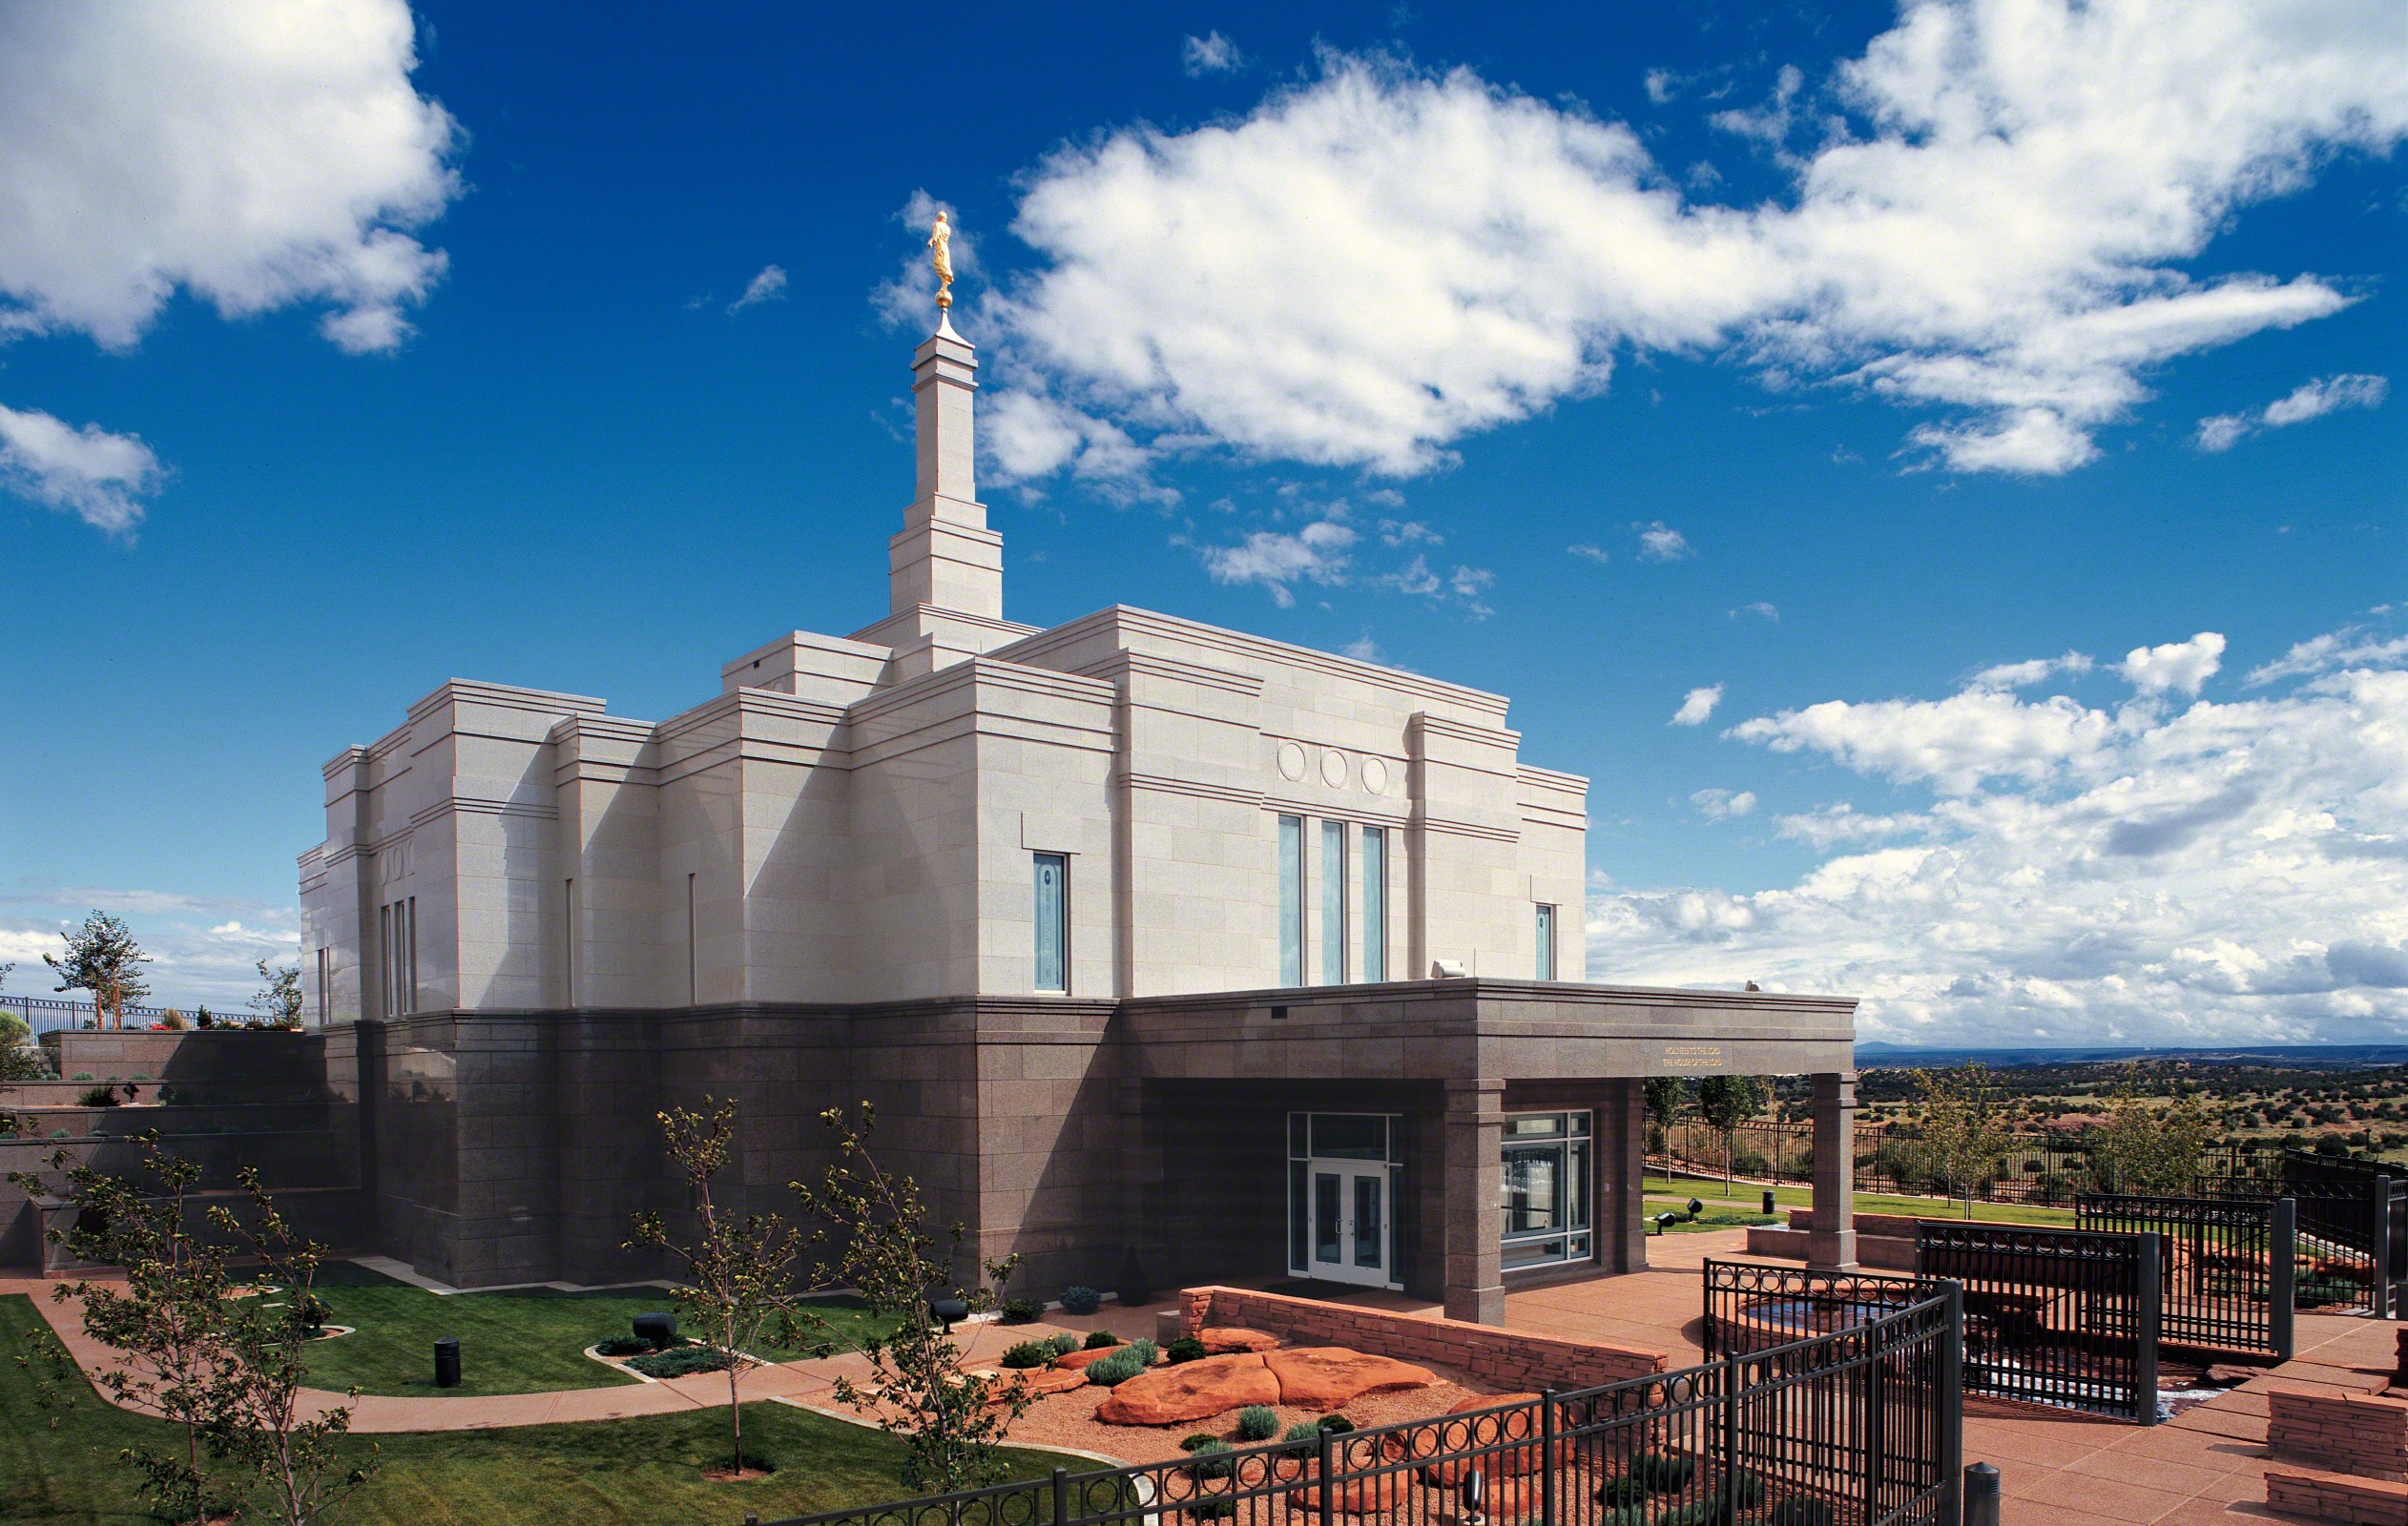 The Church of Jesus Christ of Latter-day Saints | 5322 N Evergreen Rd, Spokane Valley, WA, 99216 | +1 (509) 924-2378